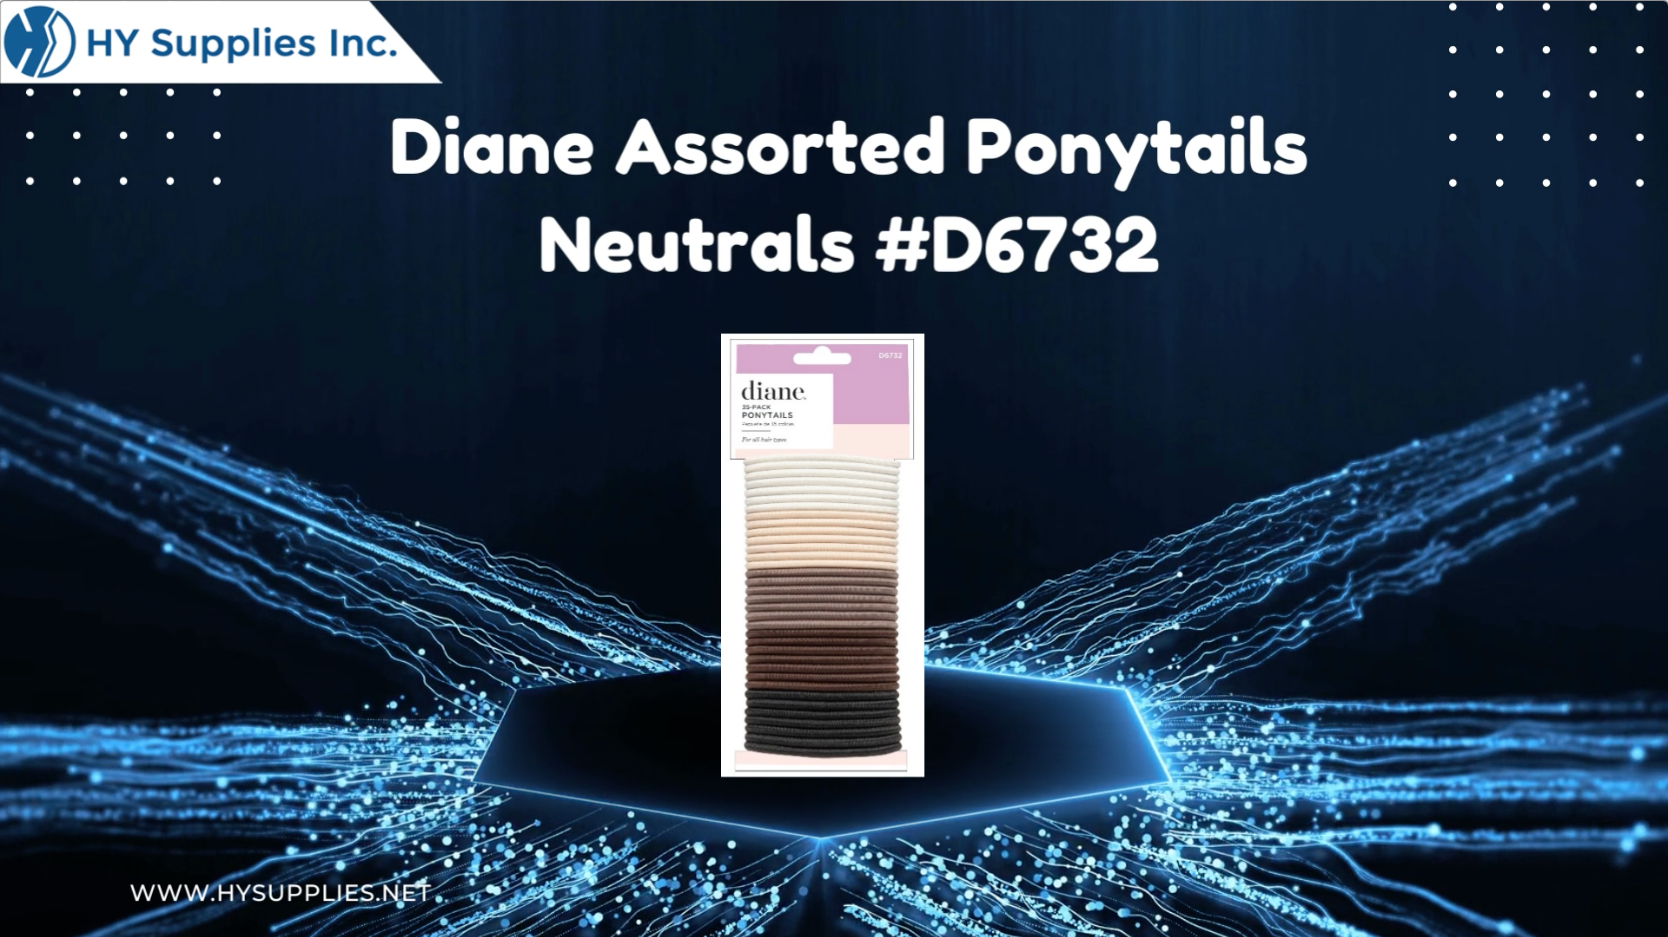 Diane Assorted Ponytails Neutrals #D6732